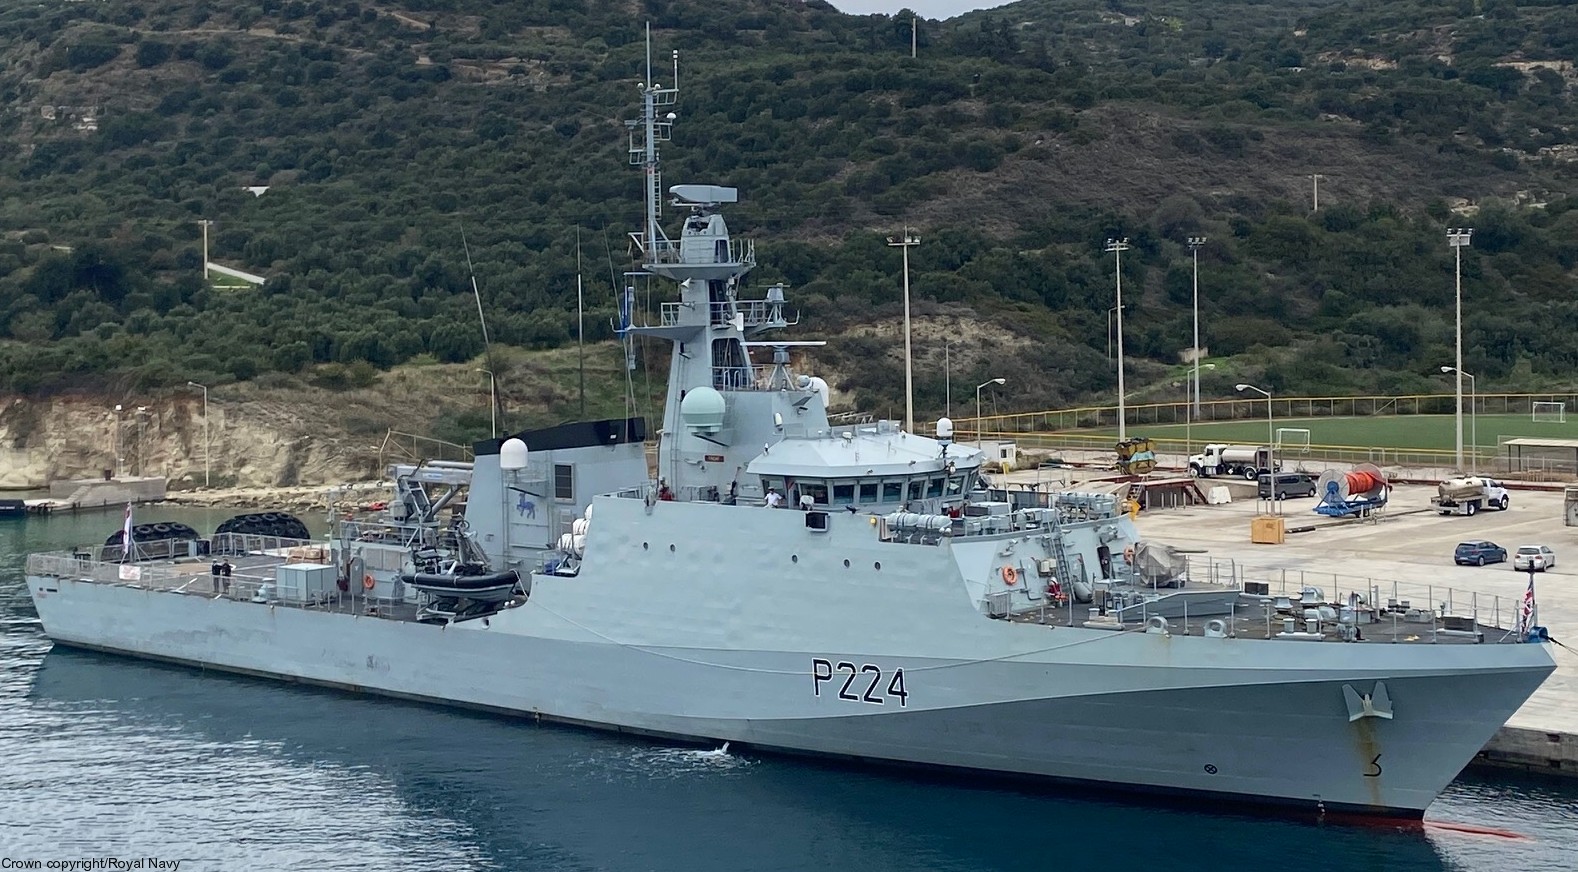 p224 hms trent river class offshore patrol vessel opv royal navy 12